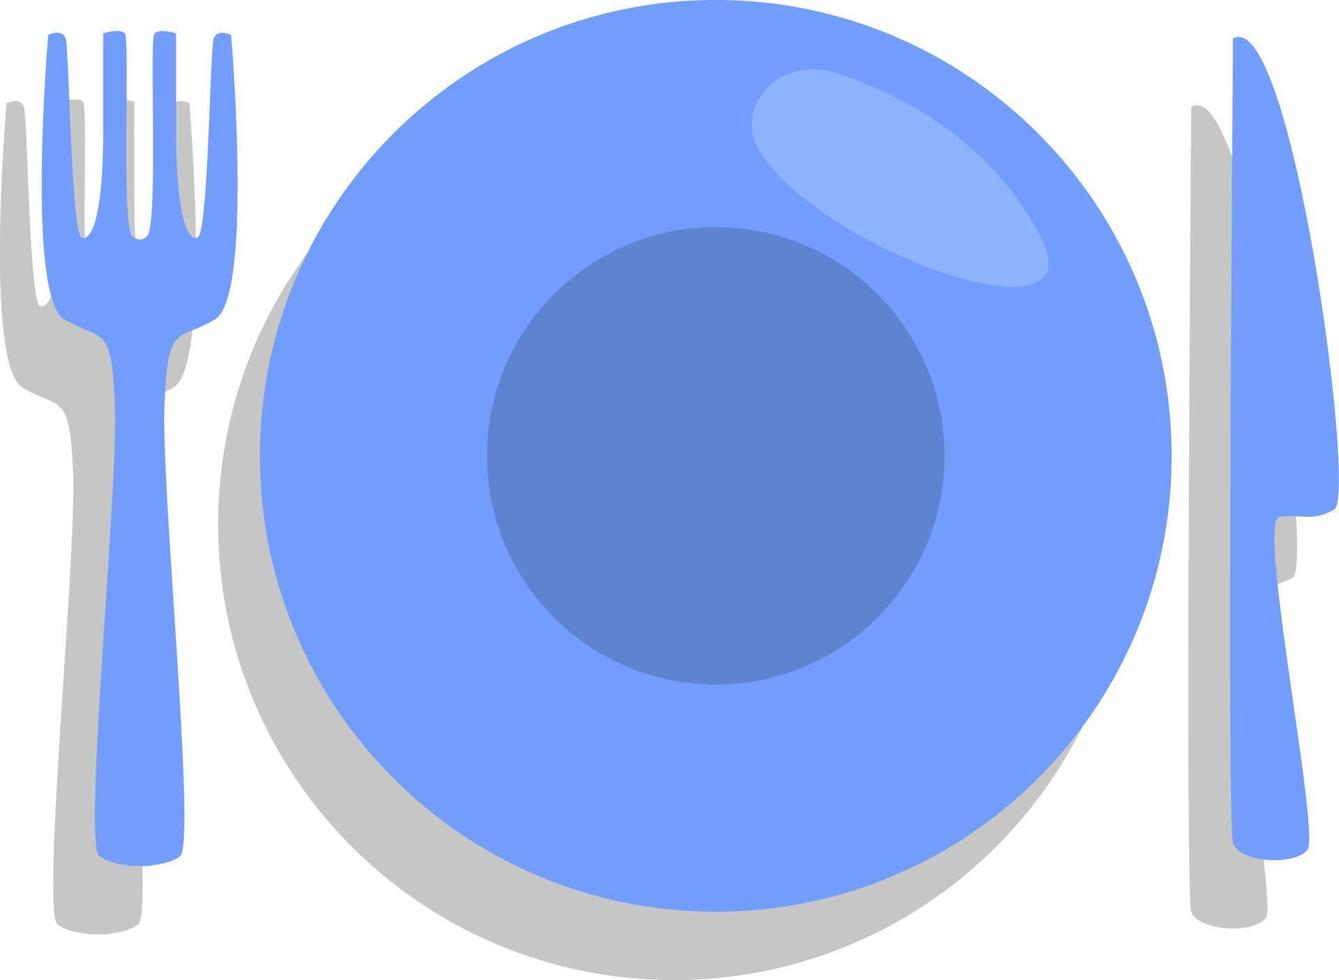 Plate for dinner, illustration, vector, on a white background. vector